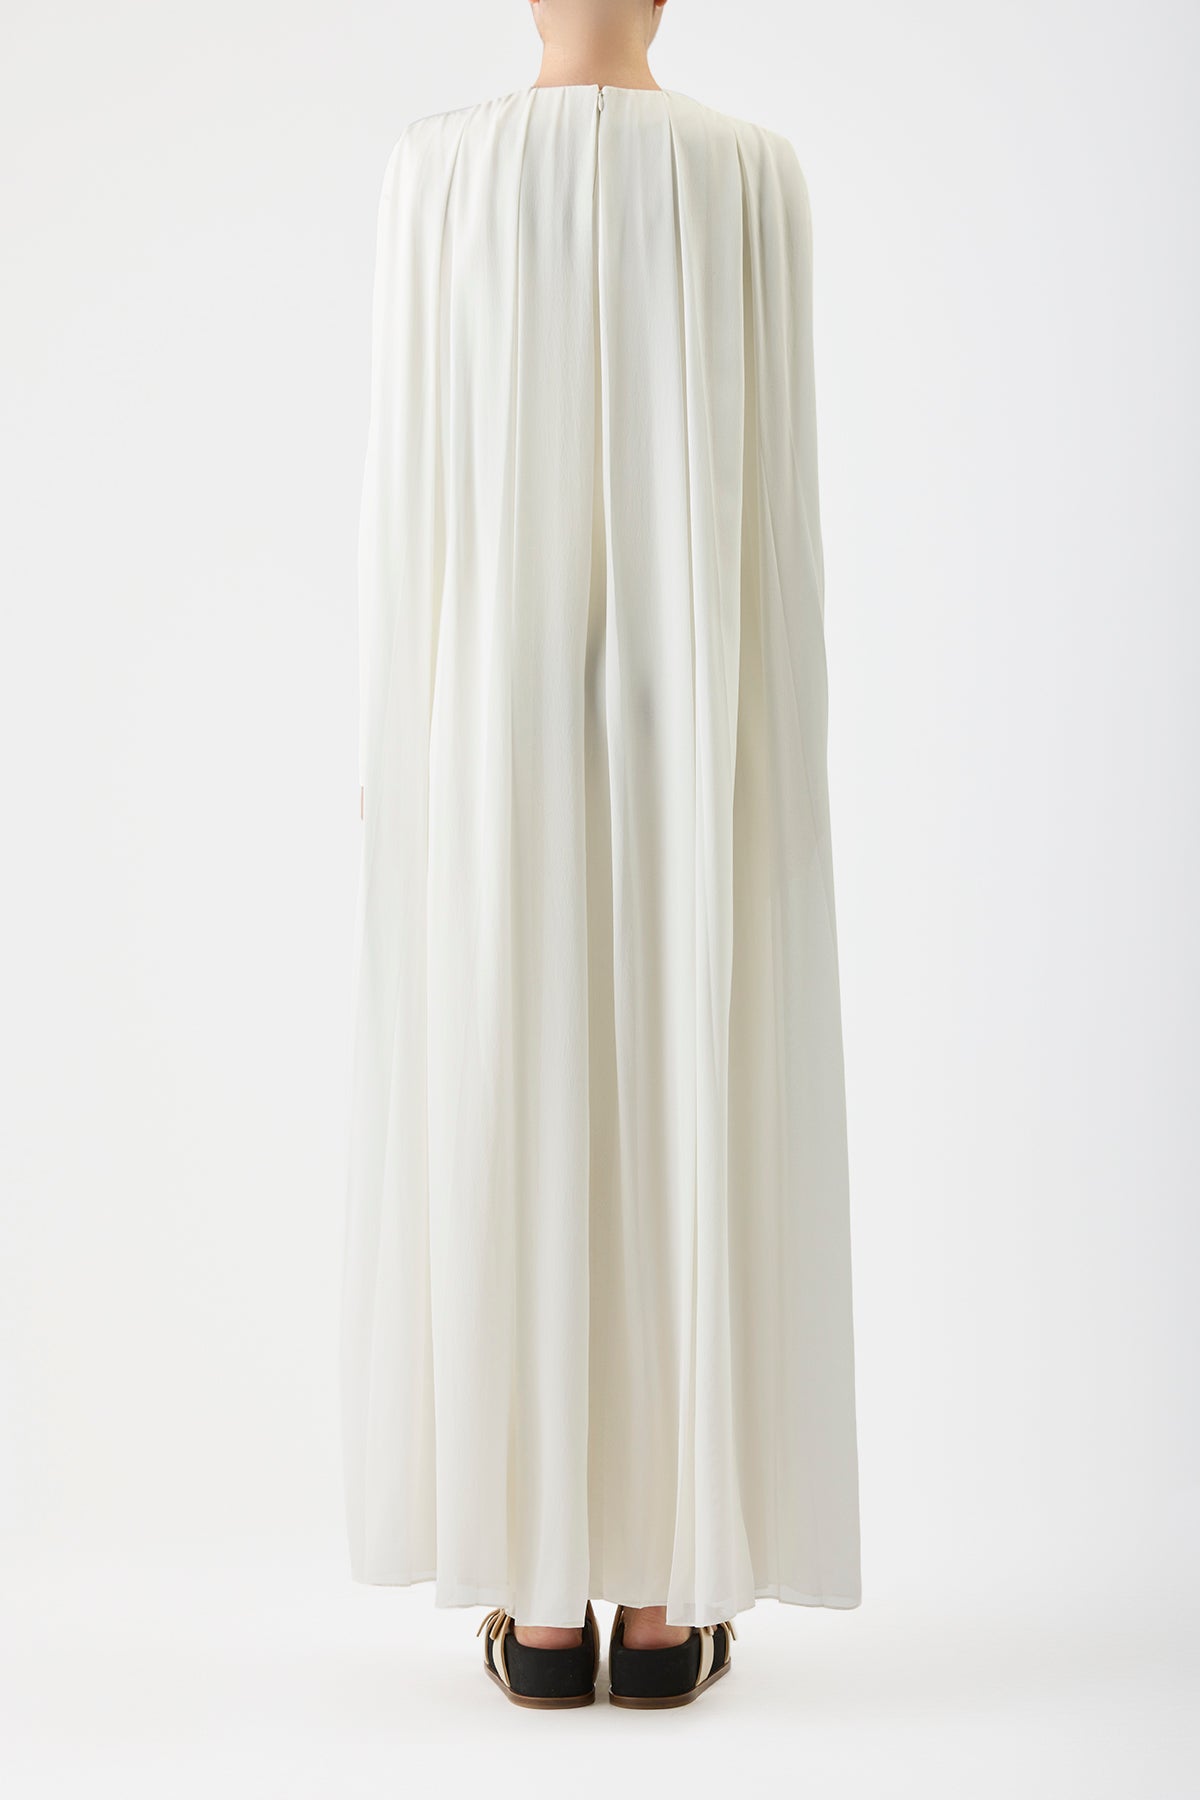 Carlota Draped Gown in Ivory Silk Wool Cady